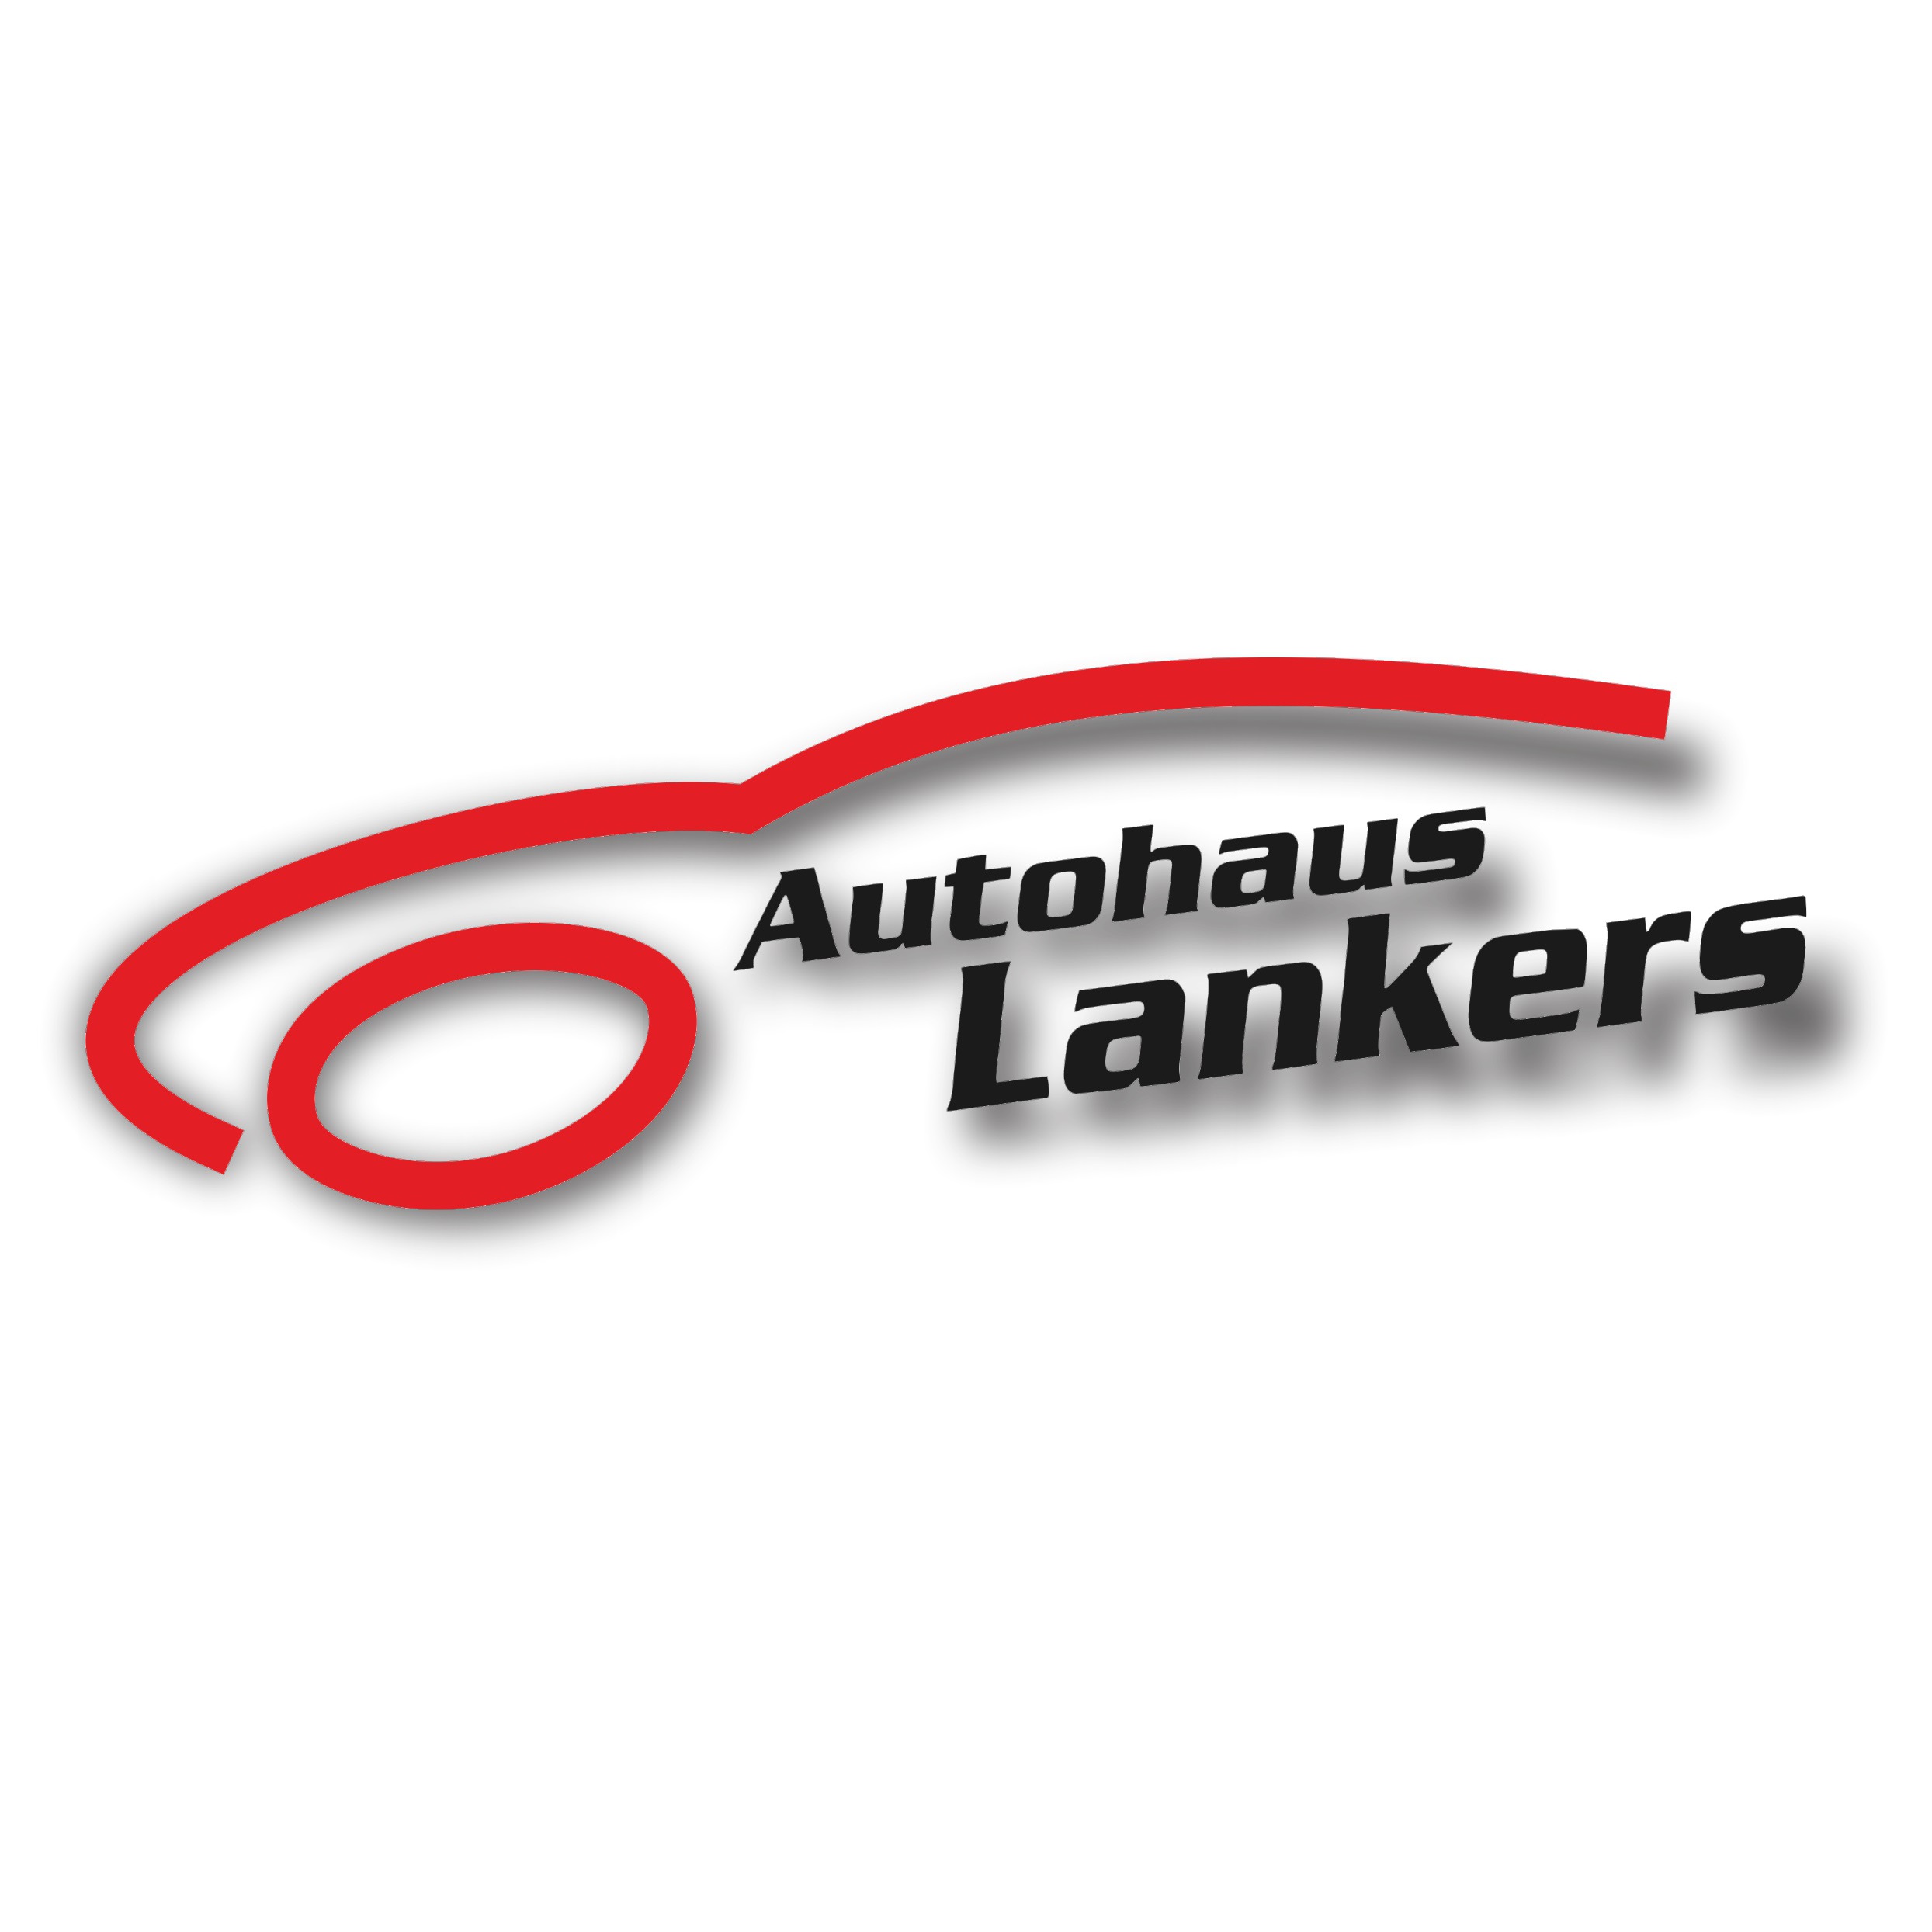 Autohaus Lankers in Bad Dürrenberg - Logo